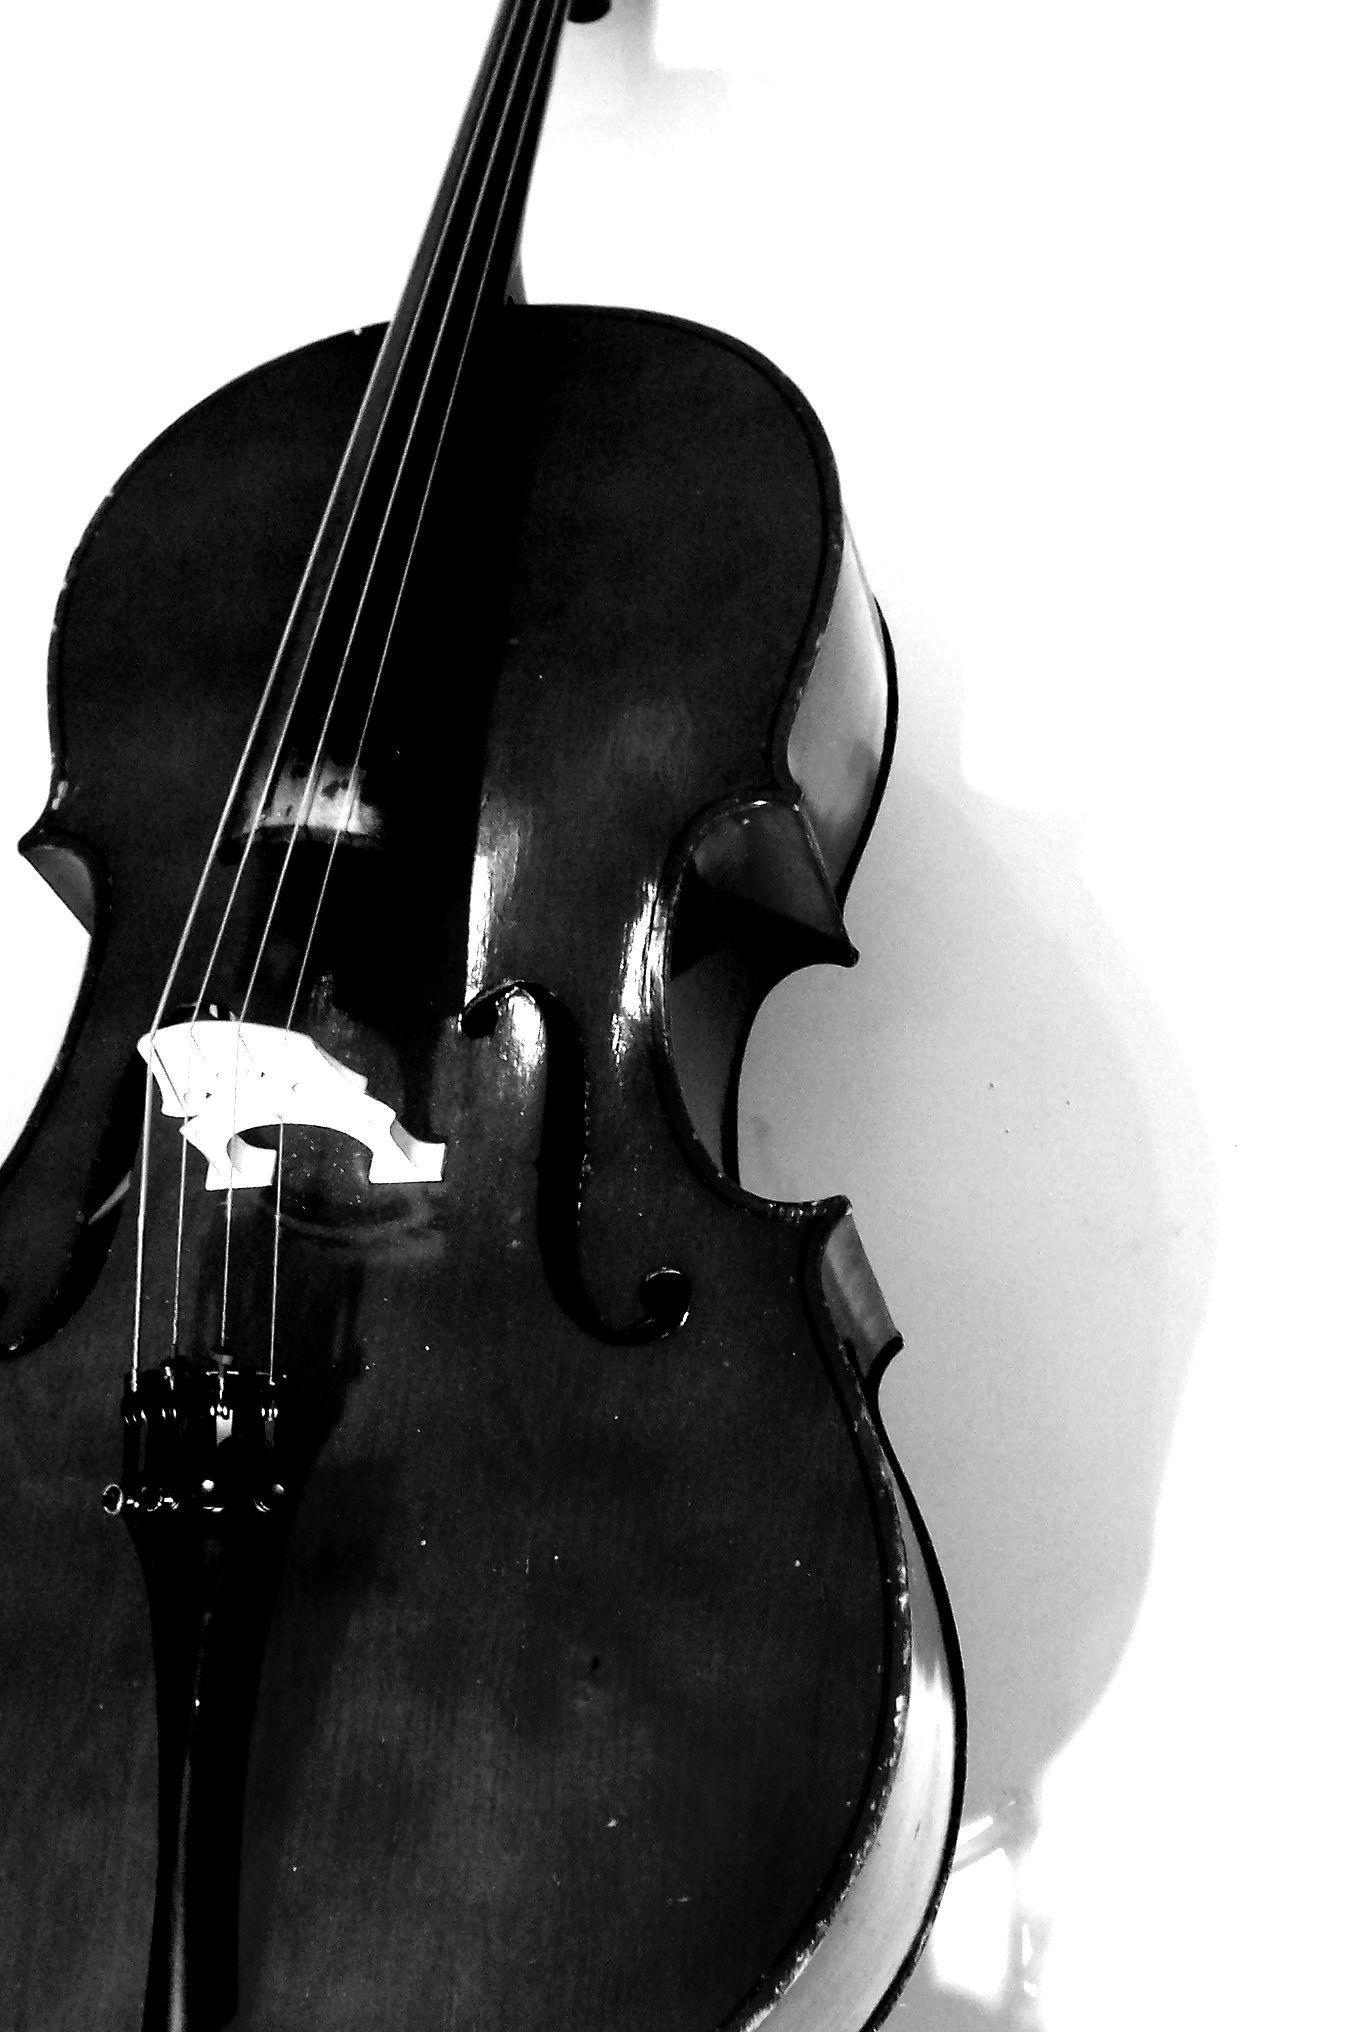 image For > Black And White Cello Wallpaper